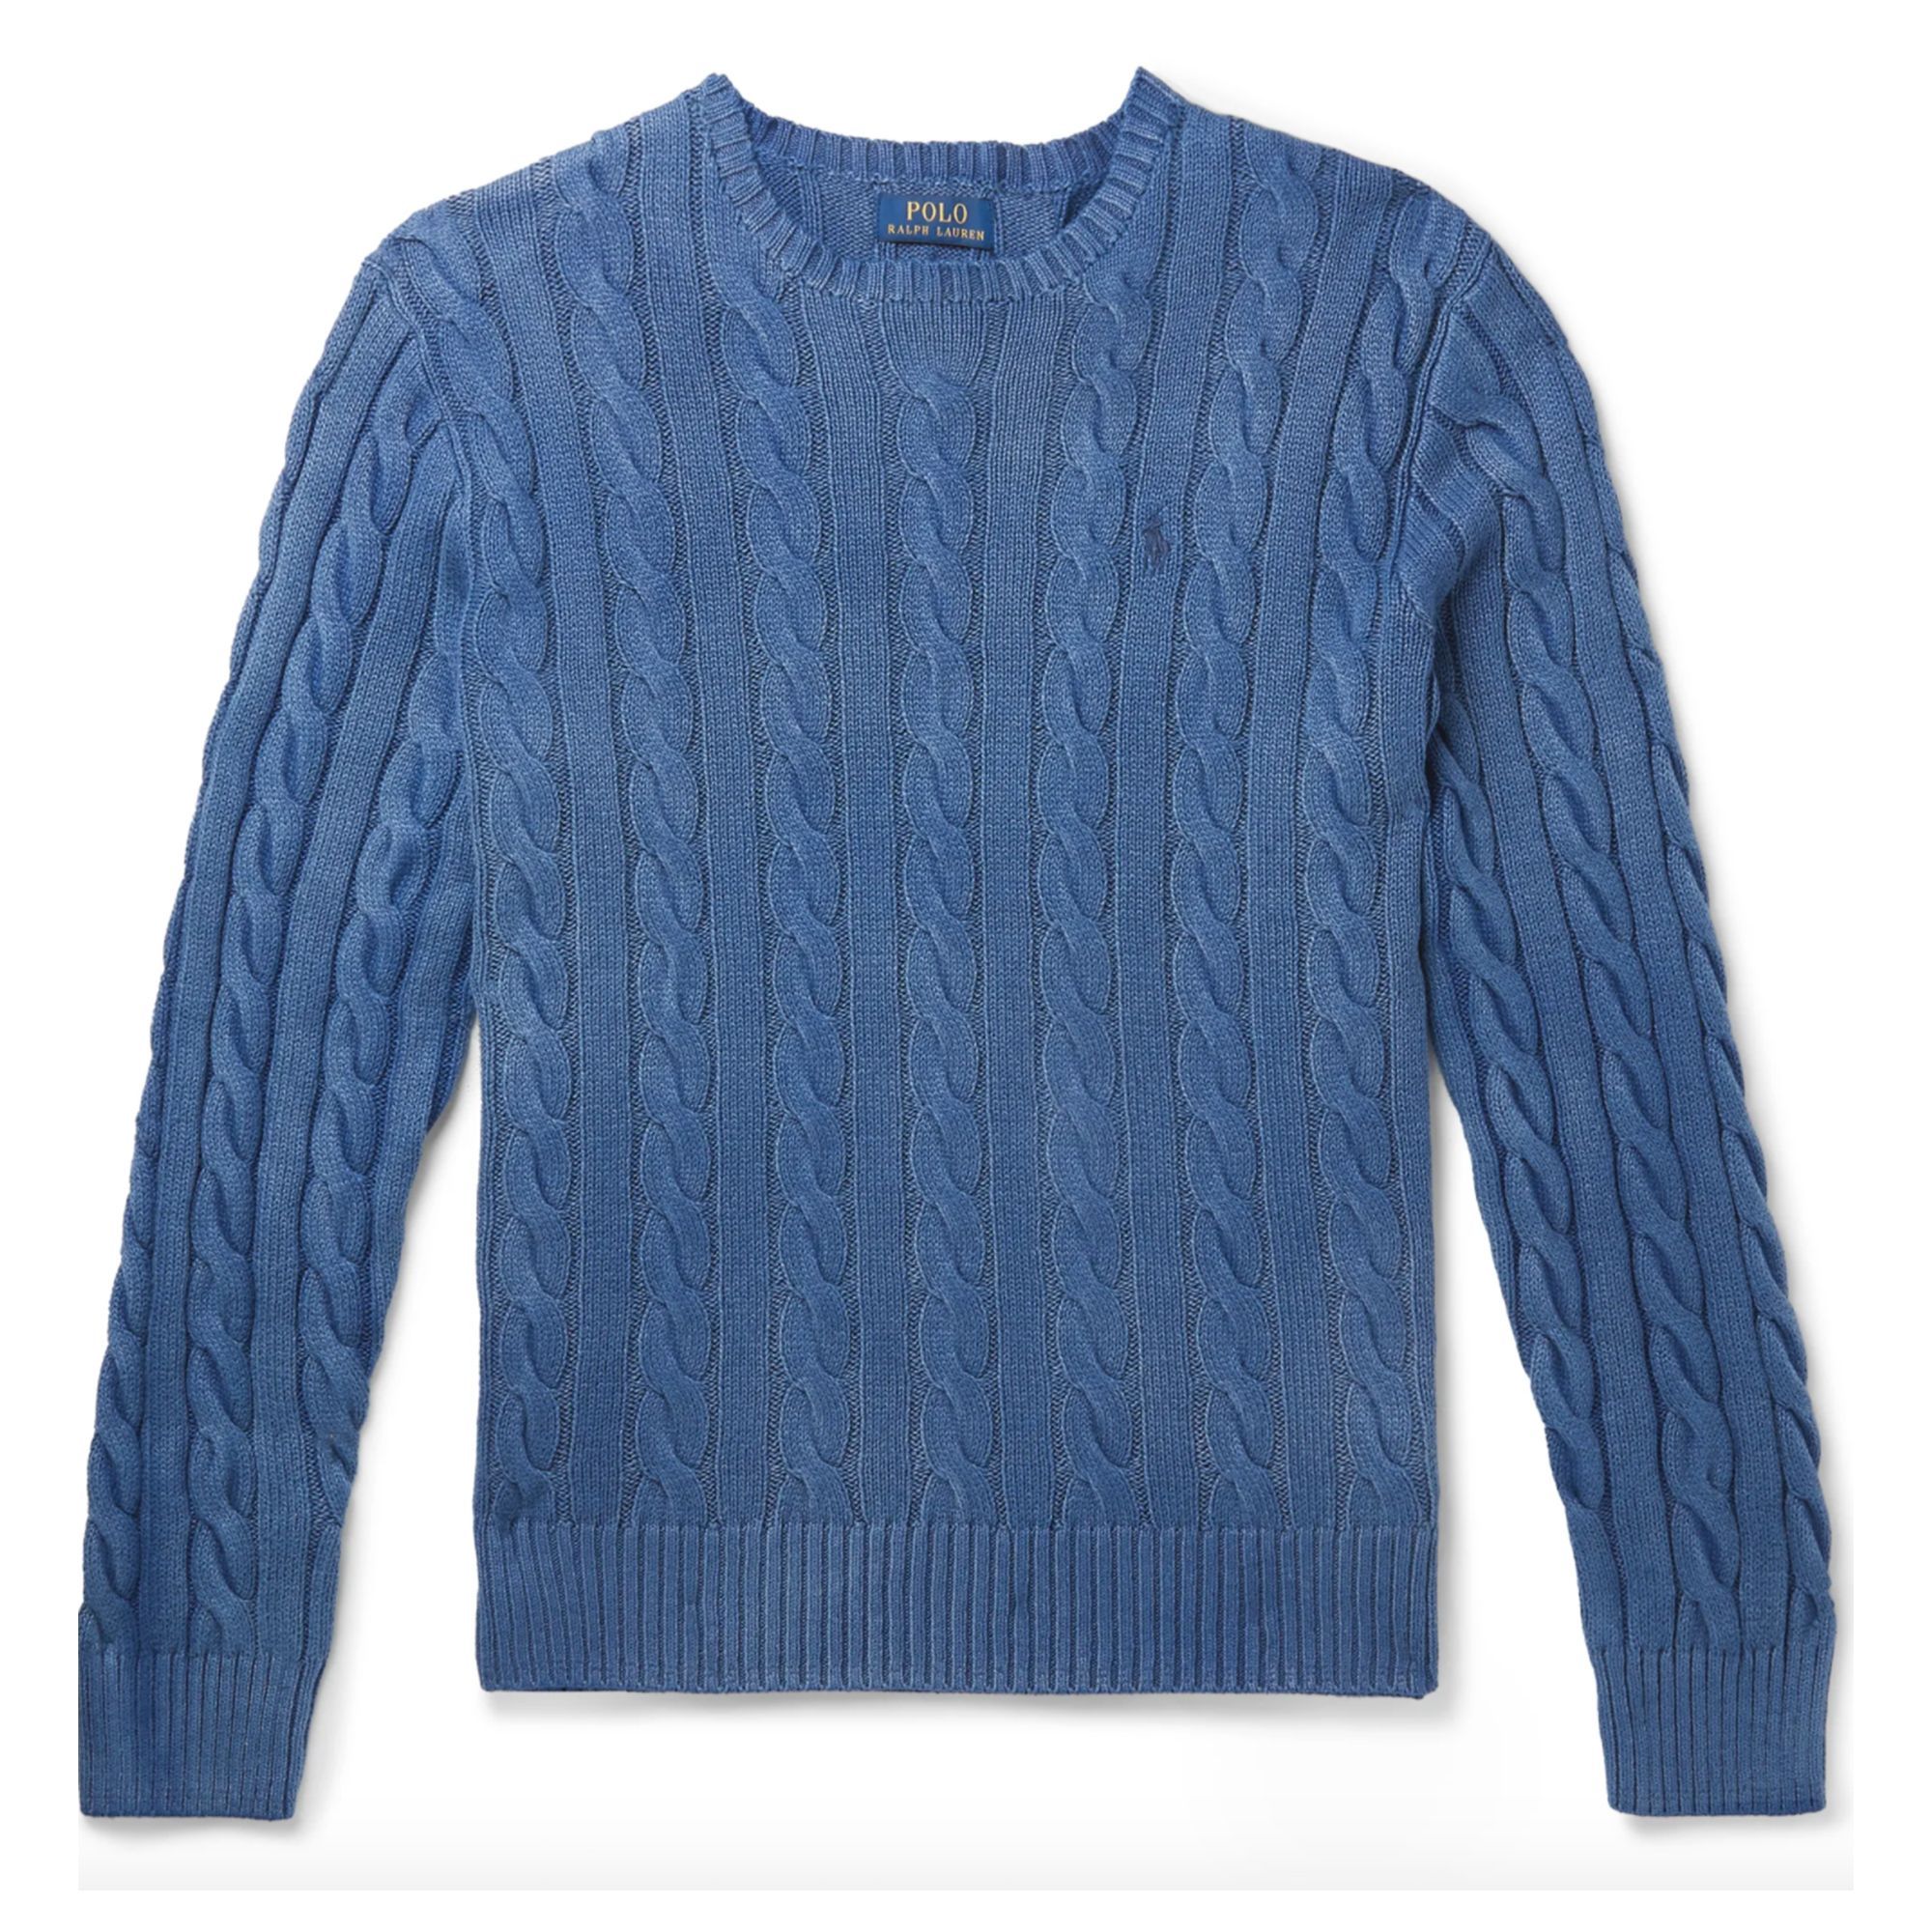 A Blue Chunky Sweater